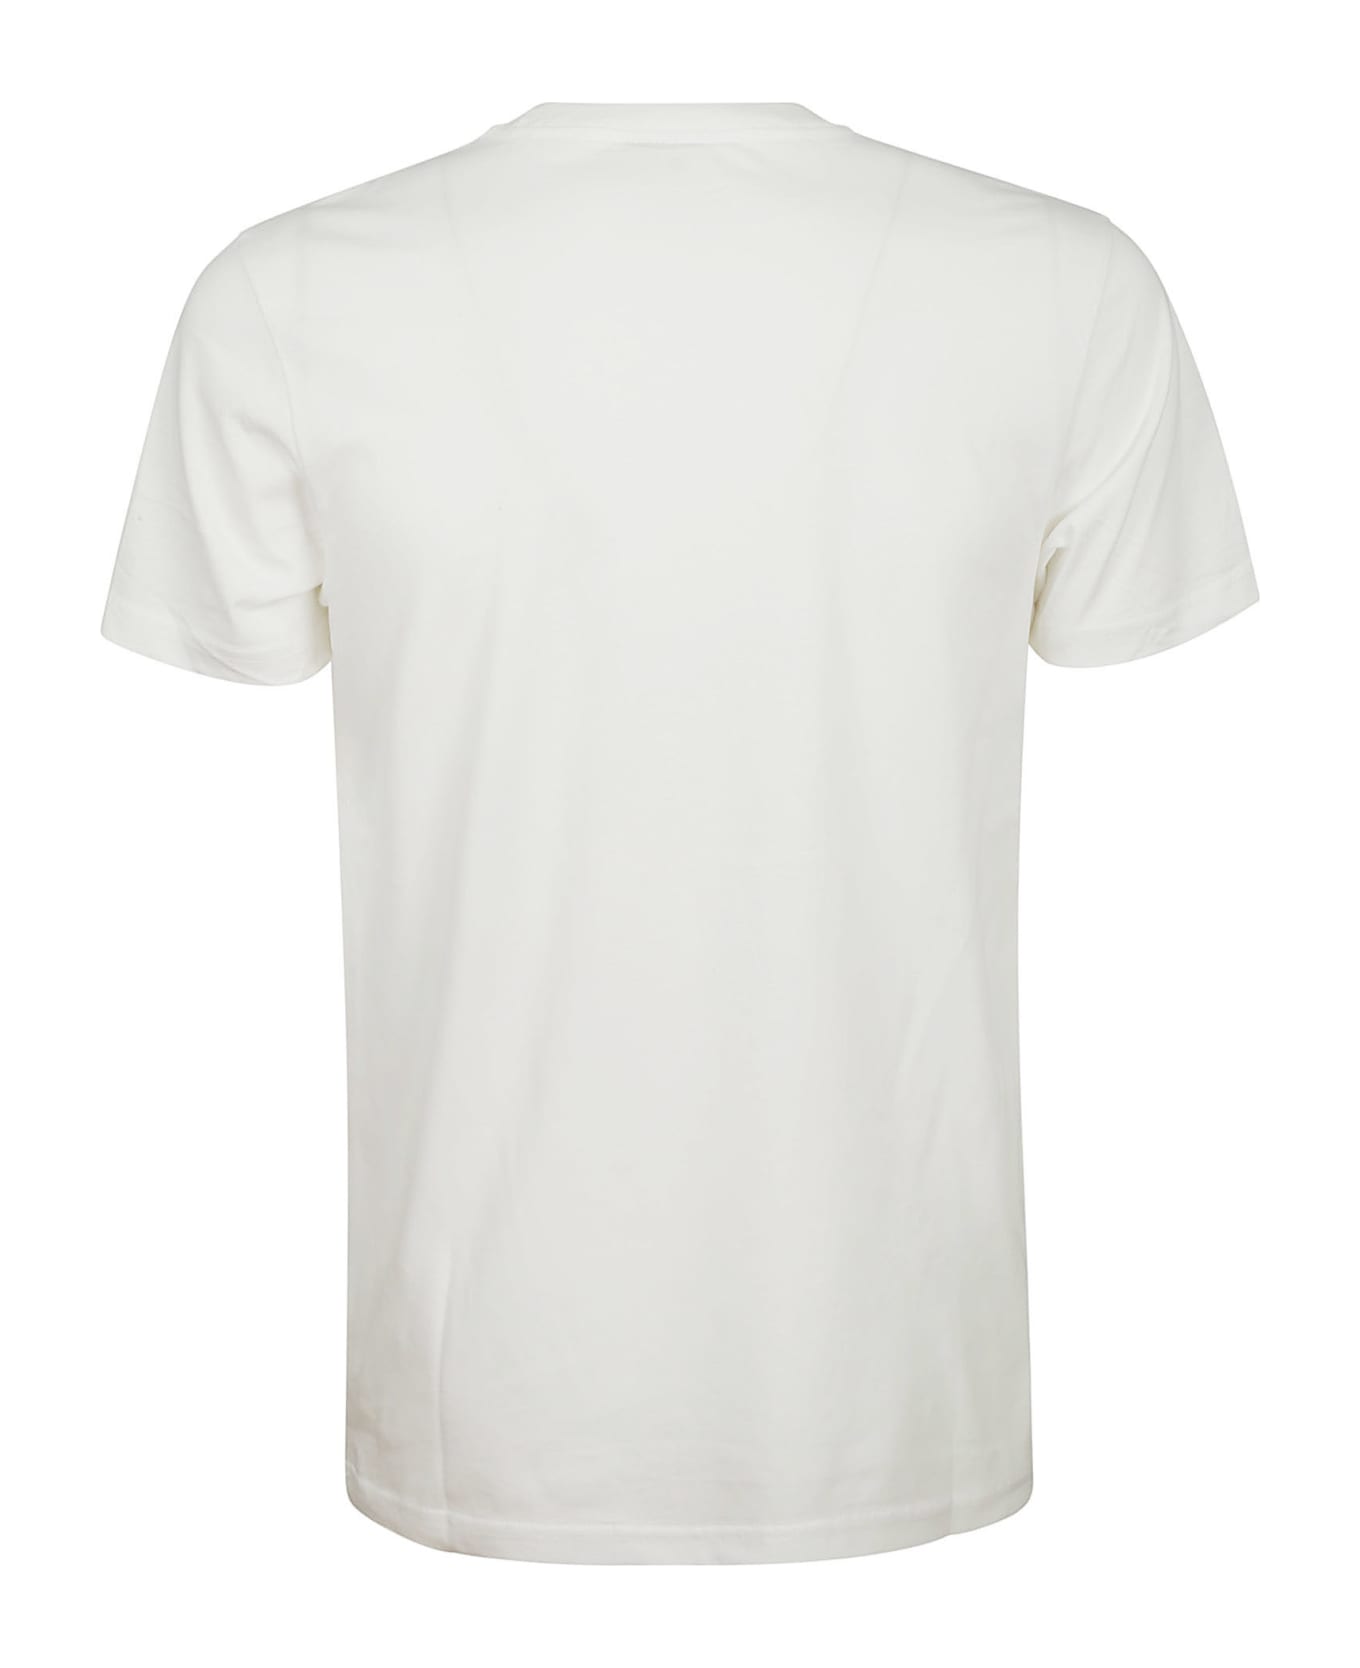 Paul Smith Slim Fit T-shirt Bottle Tops - White シャツ